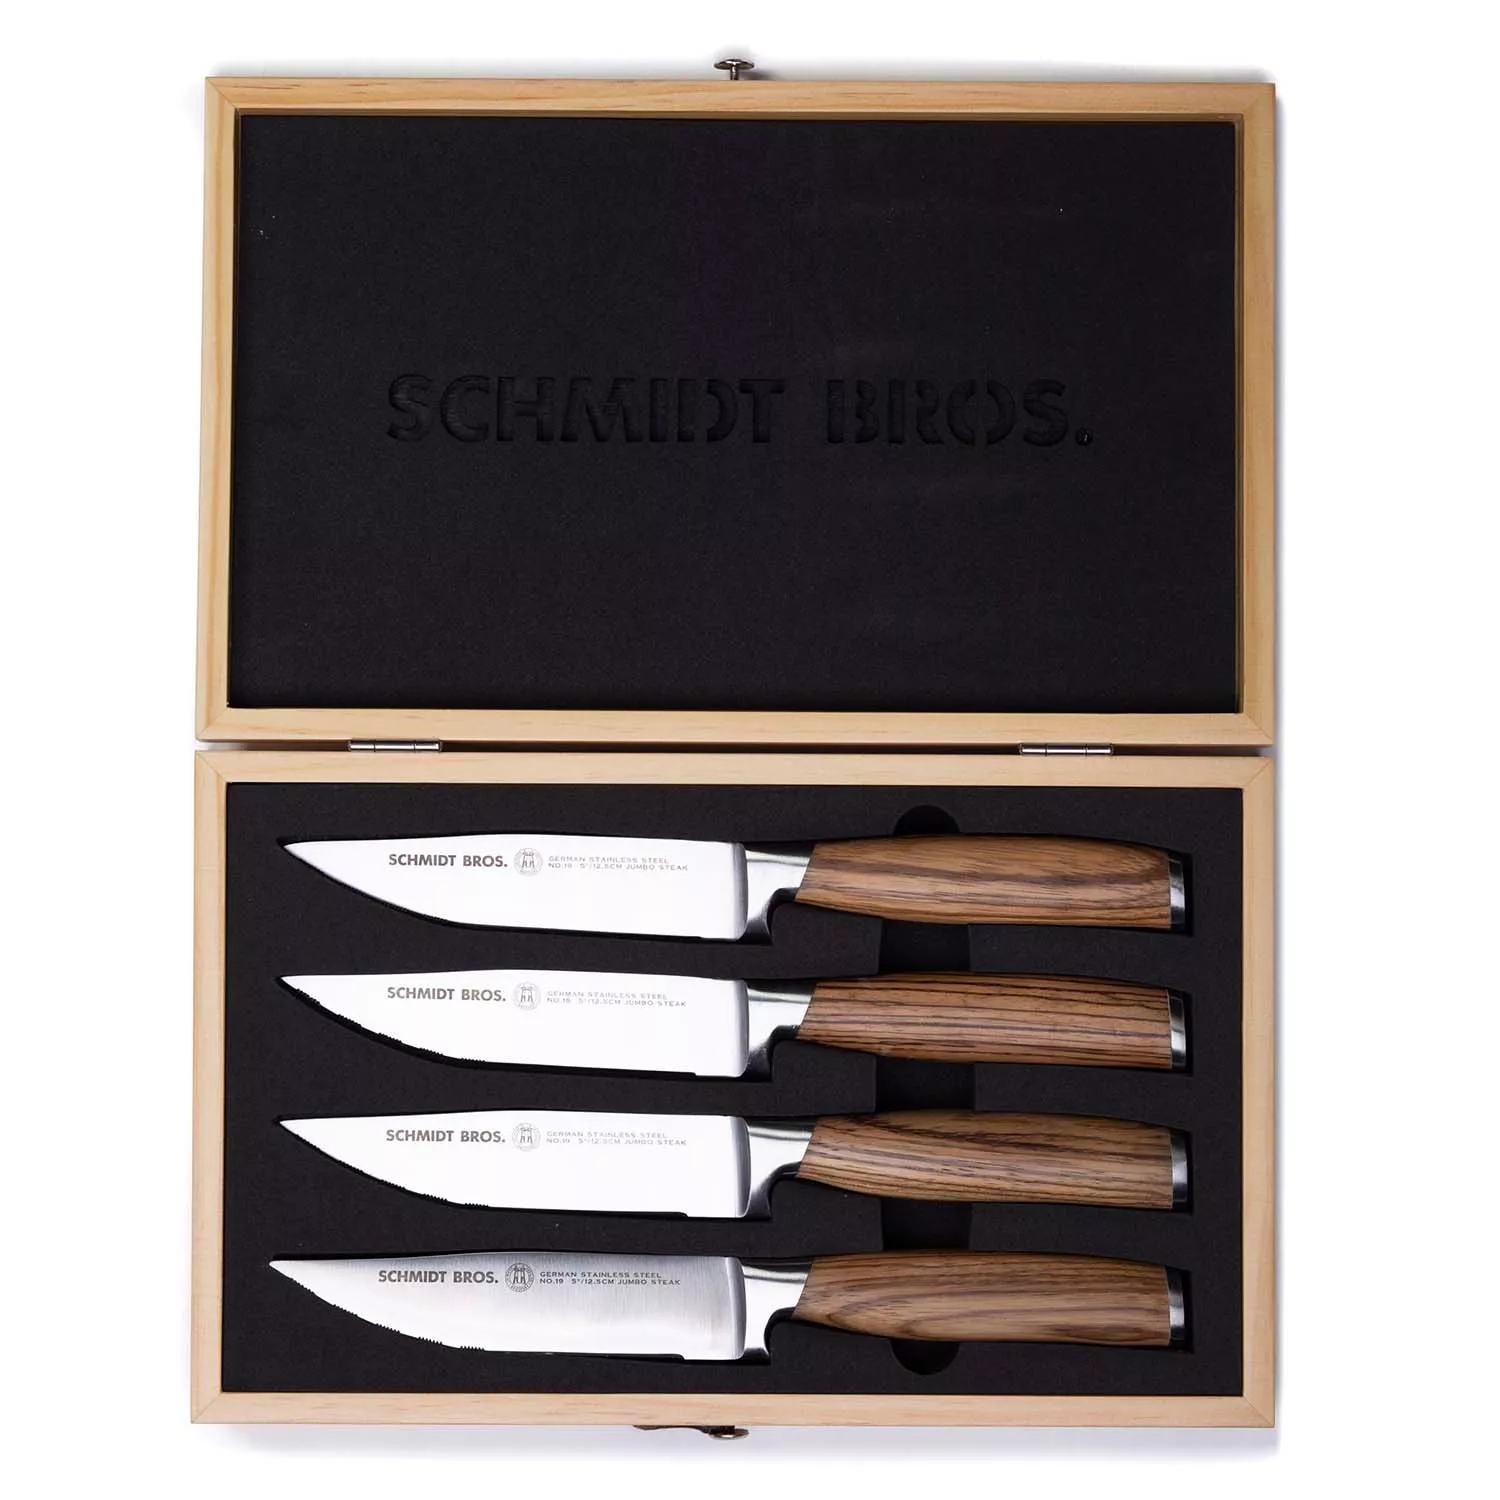 3 PC Steak Knife Set Serrated Stainless Steel Knives Steakhouse Cutlery Utensil